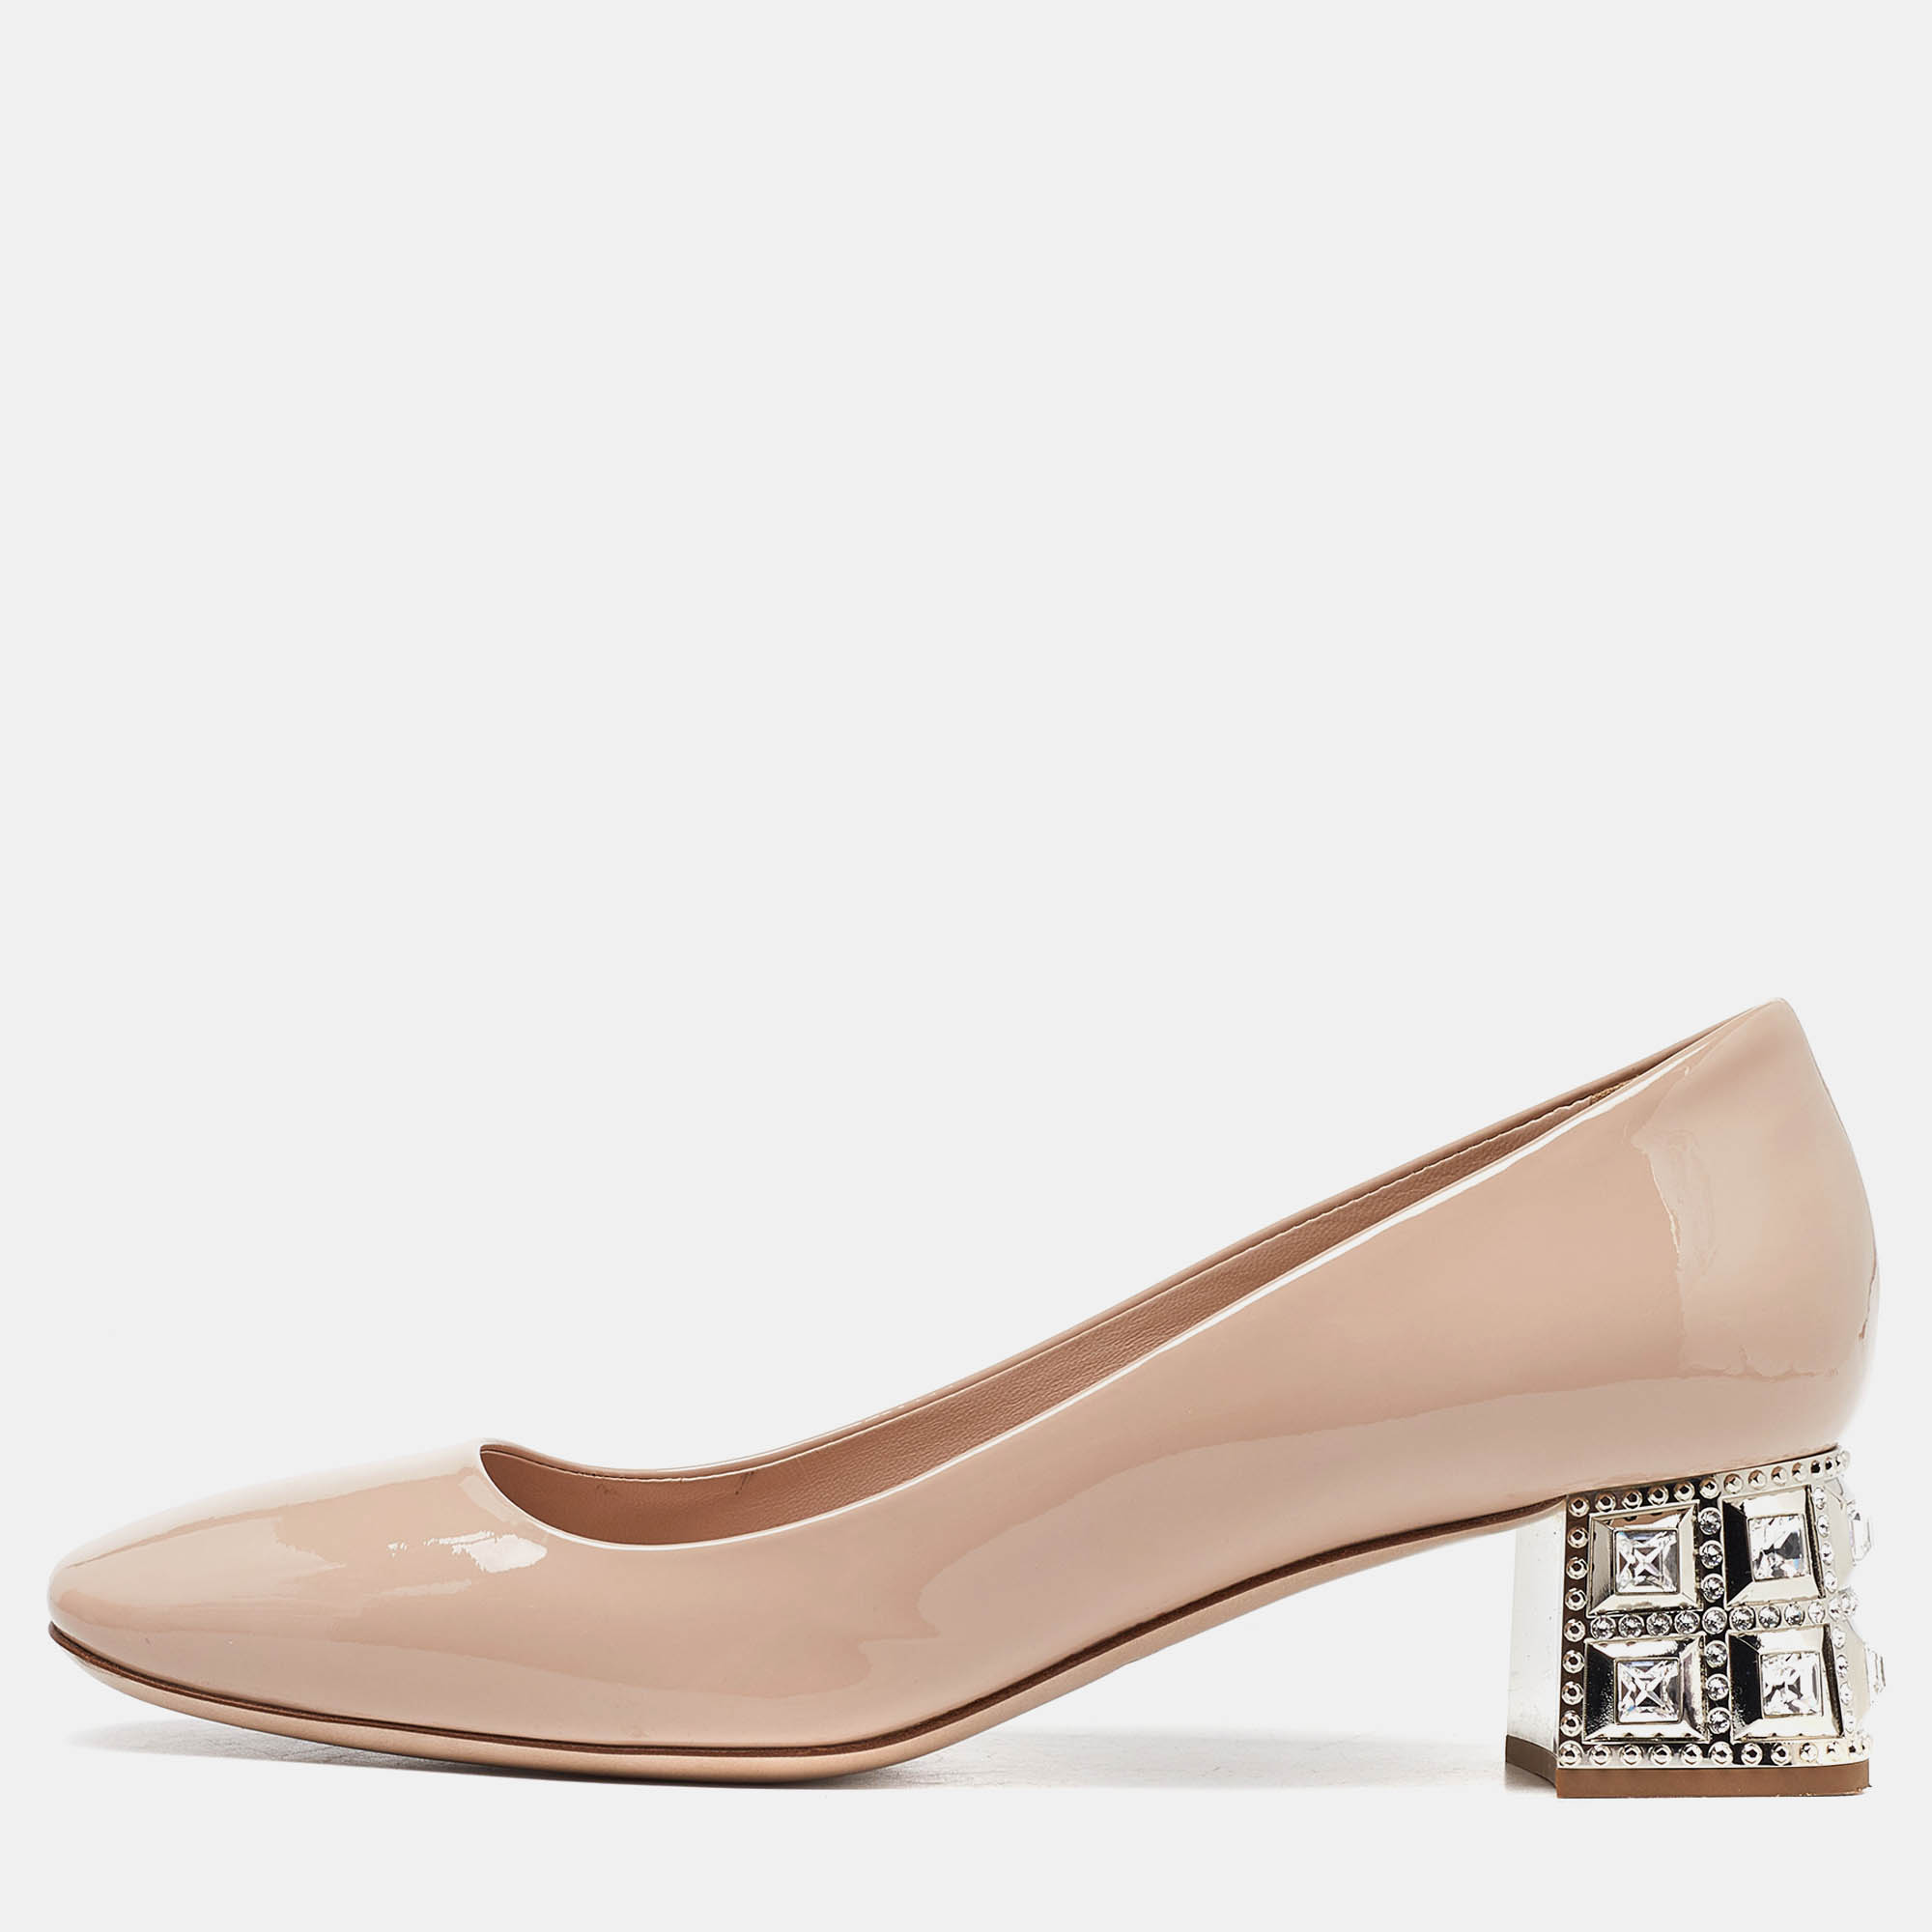 Miu miu pink patent leather crystal embellished heel pumps size 37.5